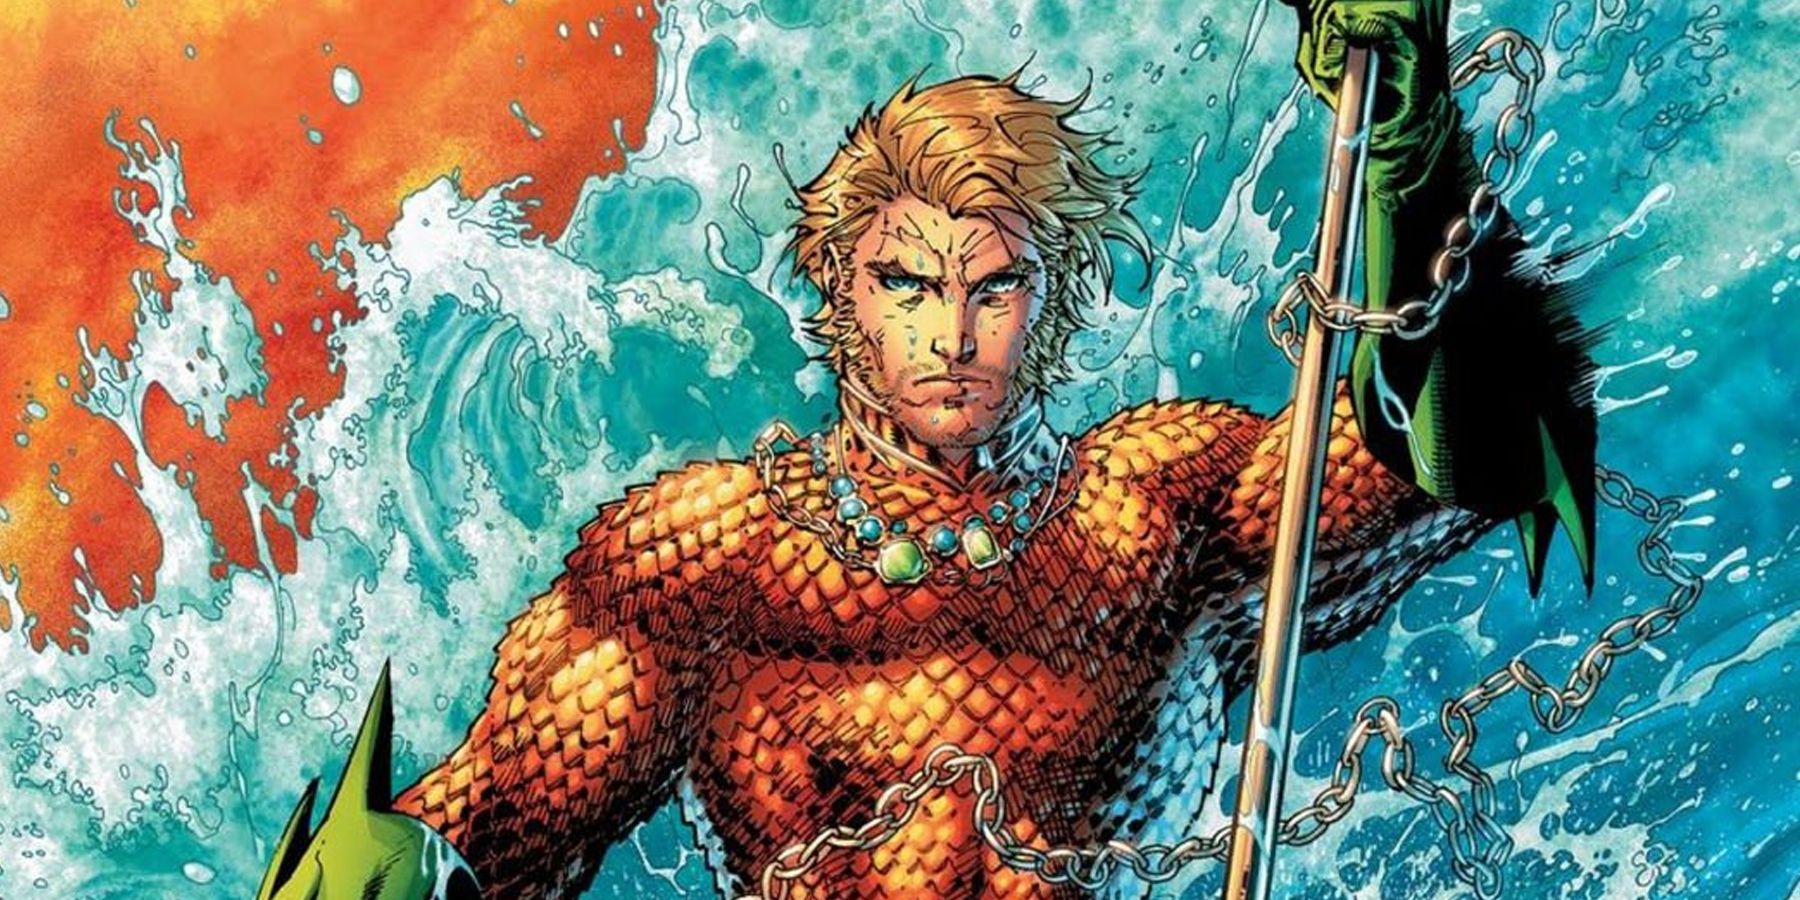 Aquaman commanding the seas